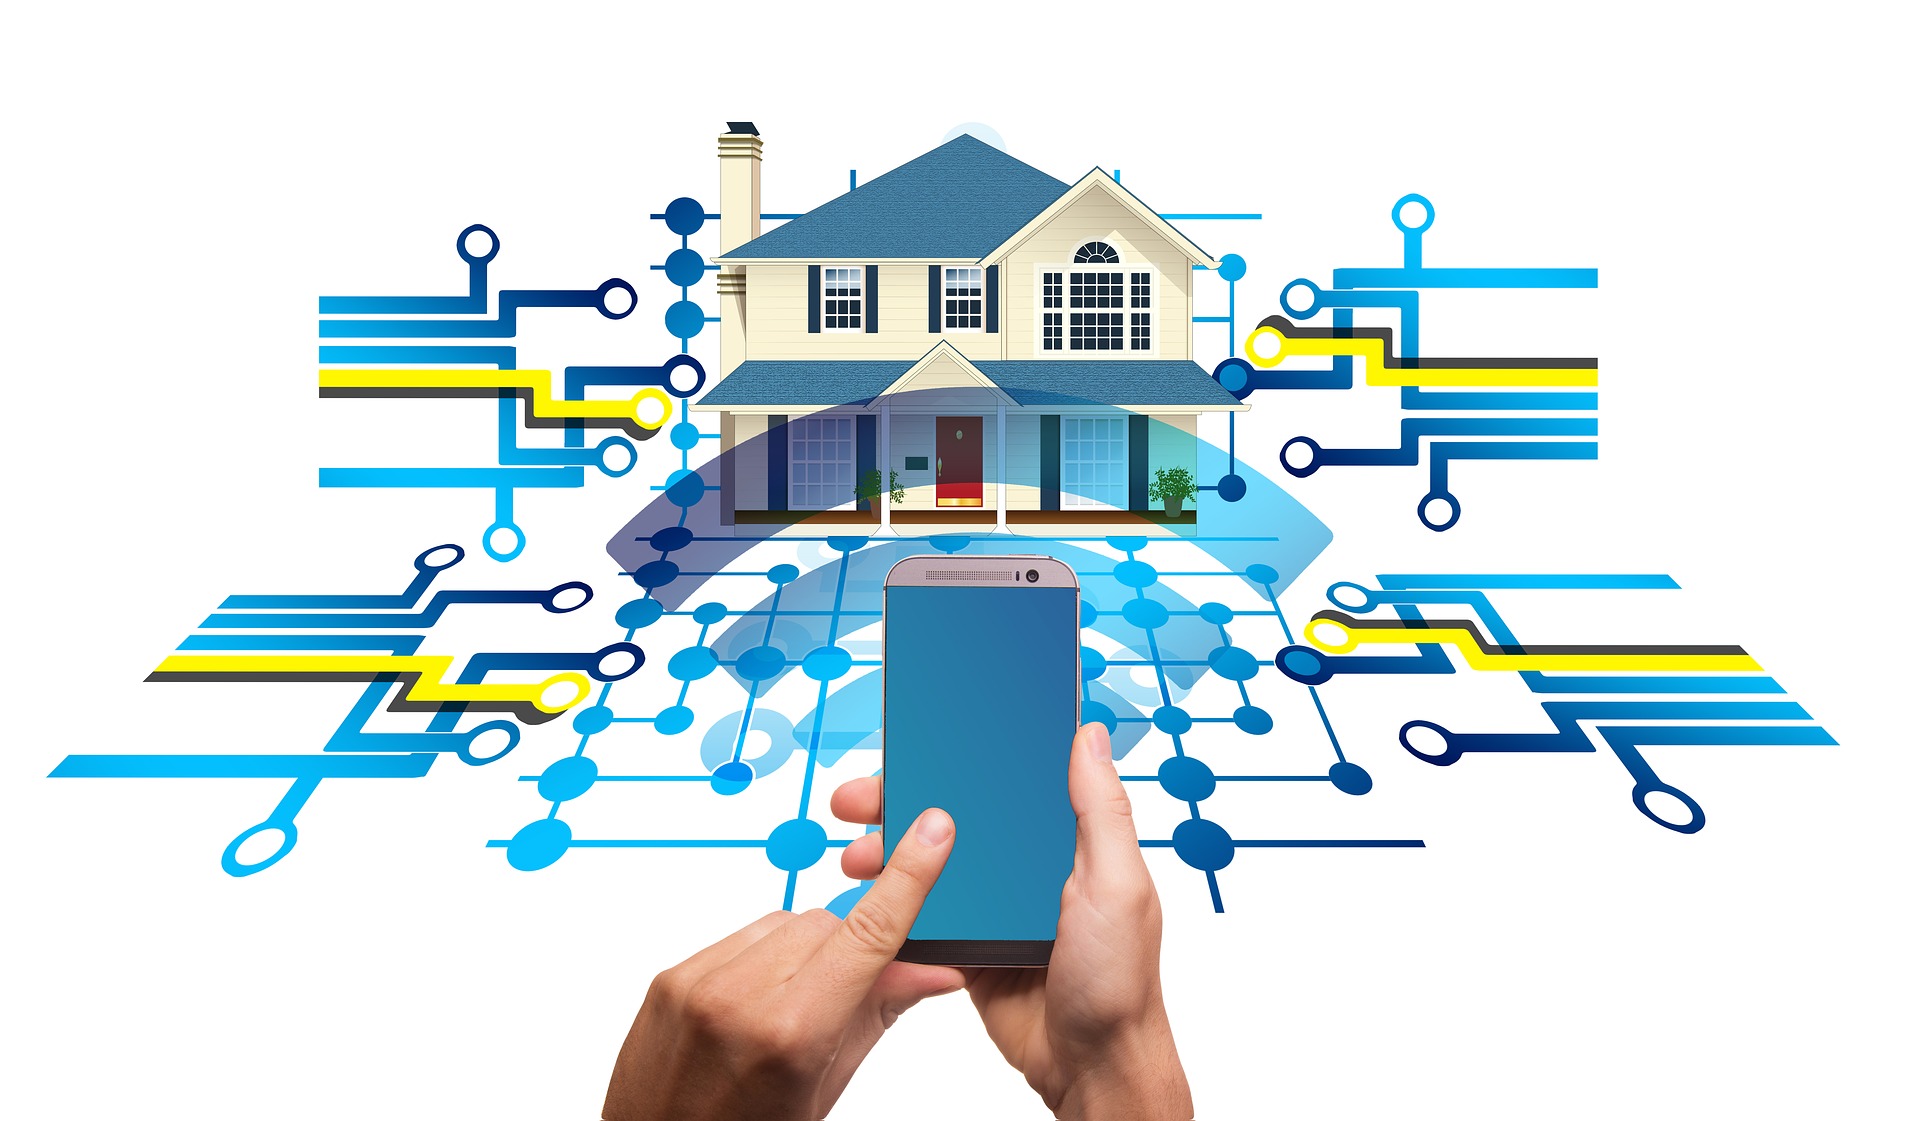 Smart home technologies